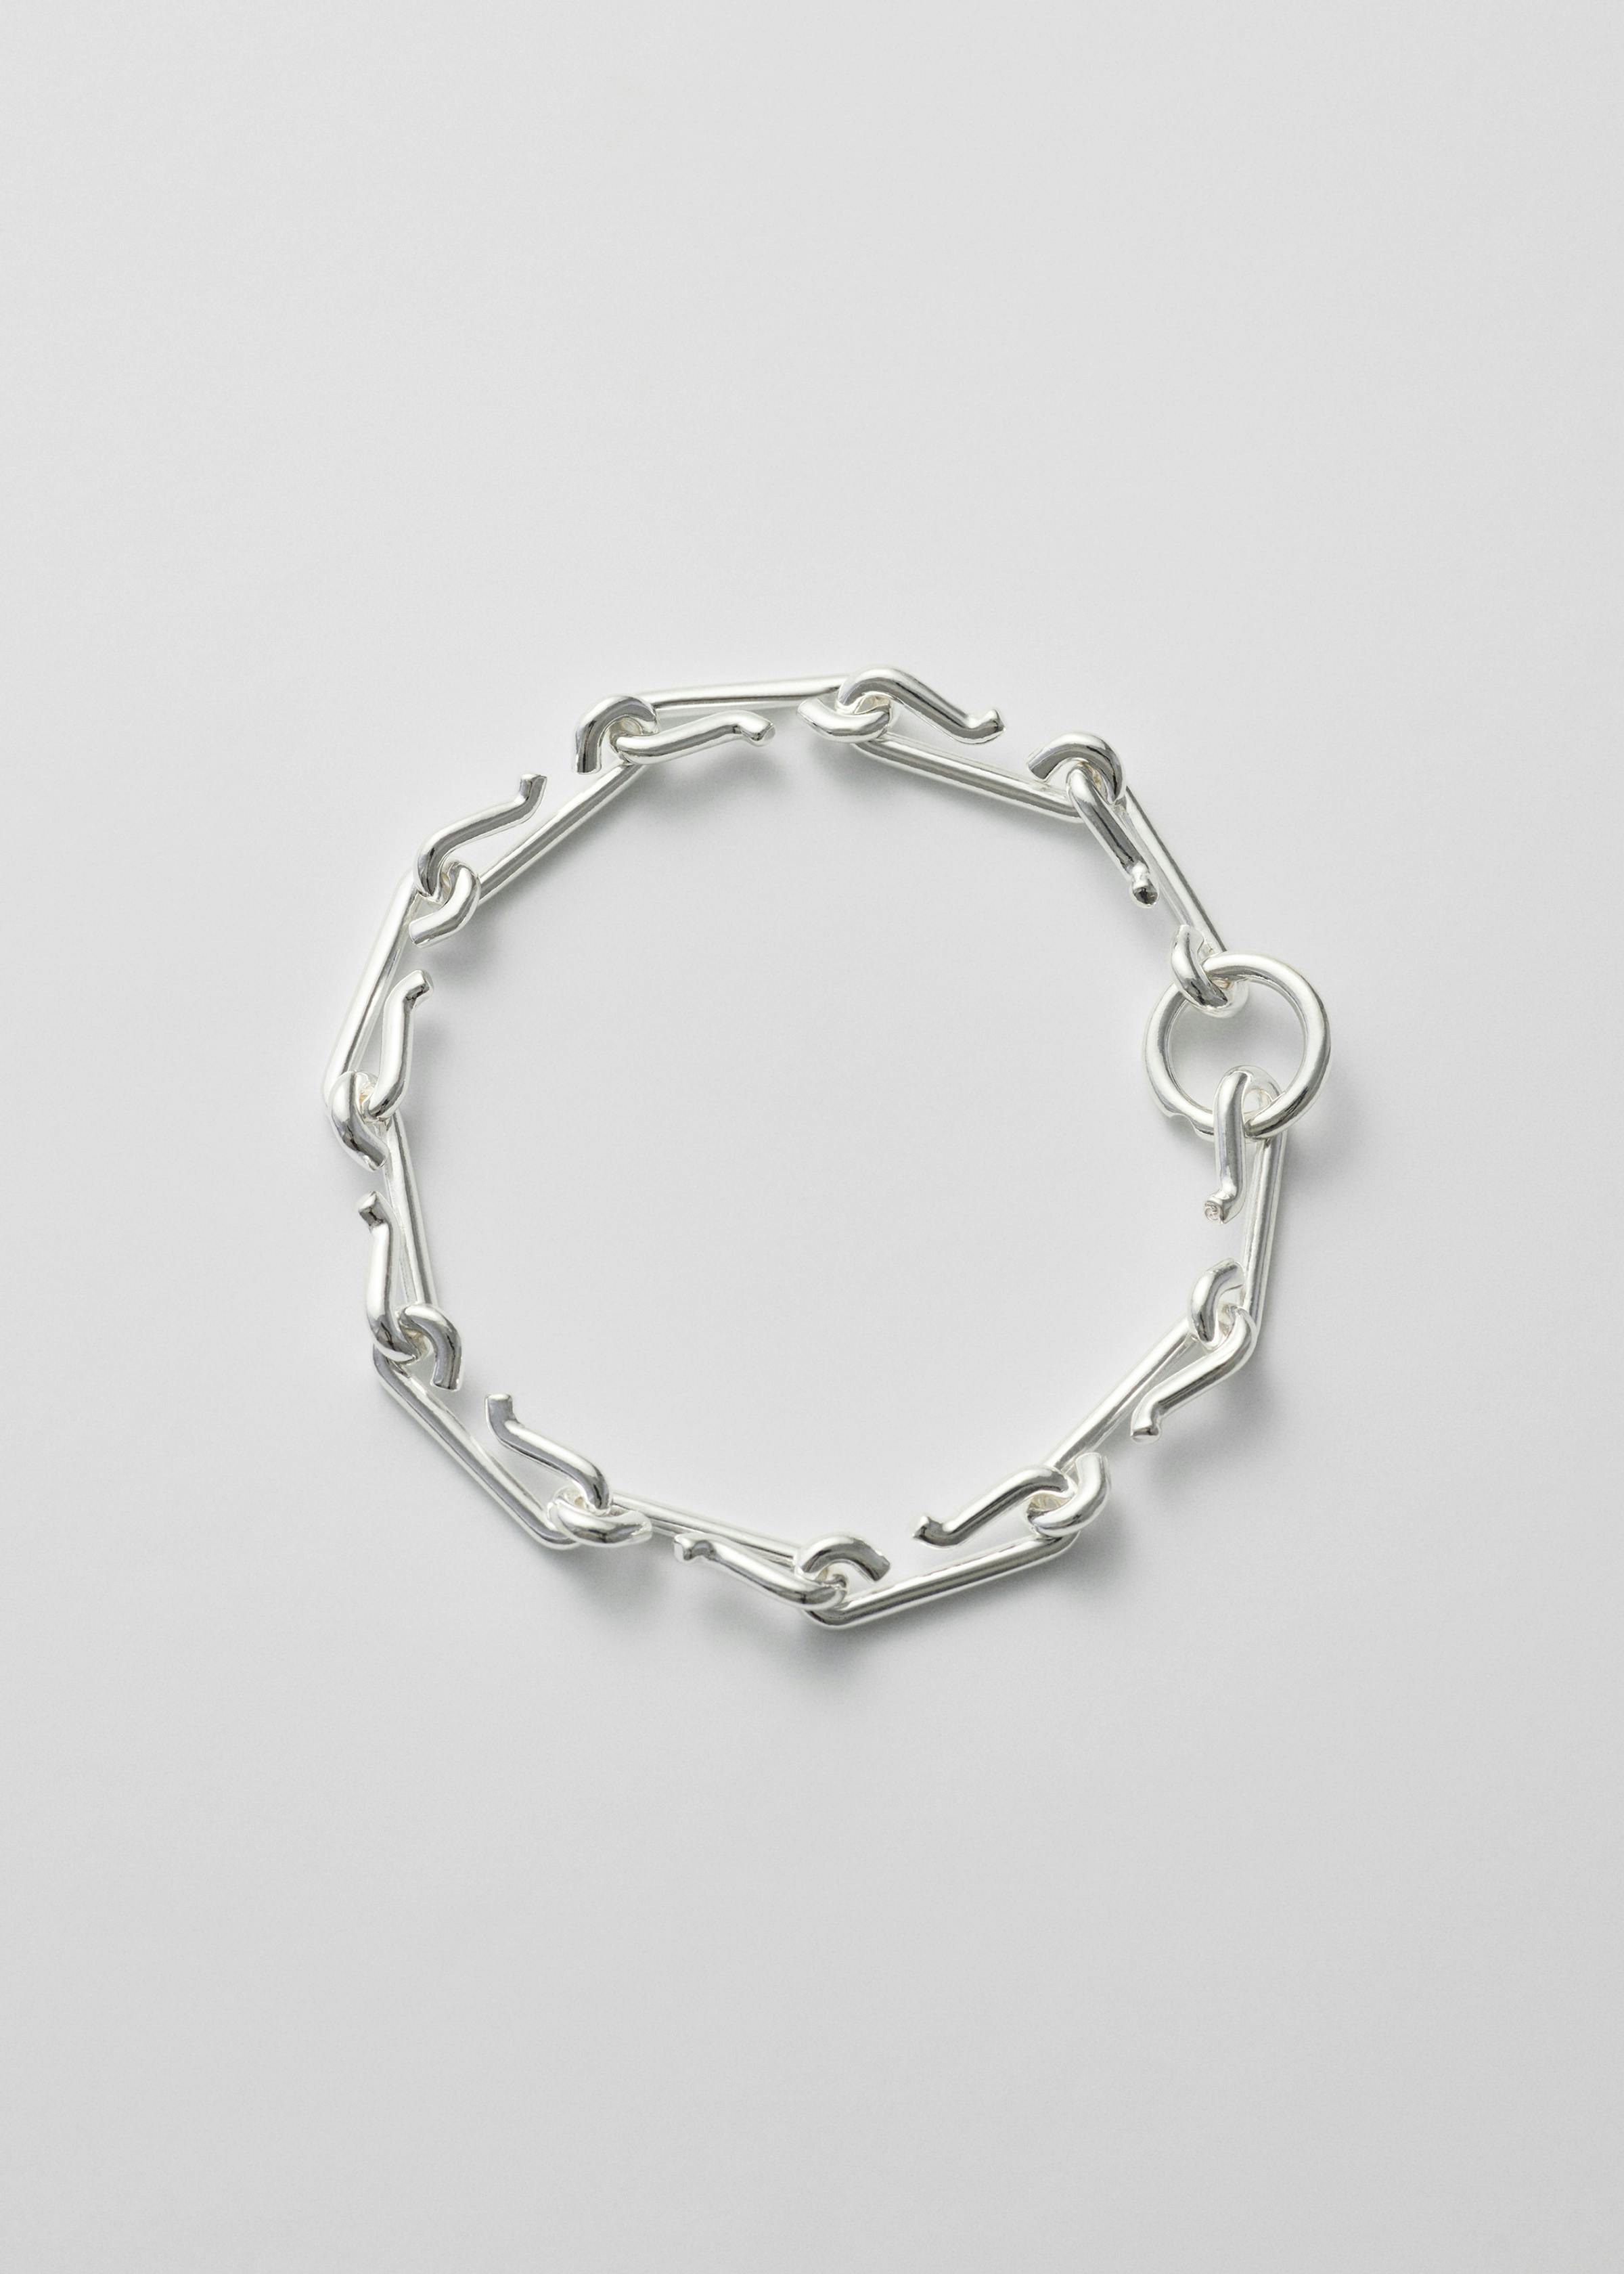 Hook bracelet